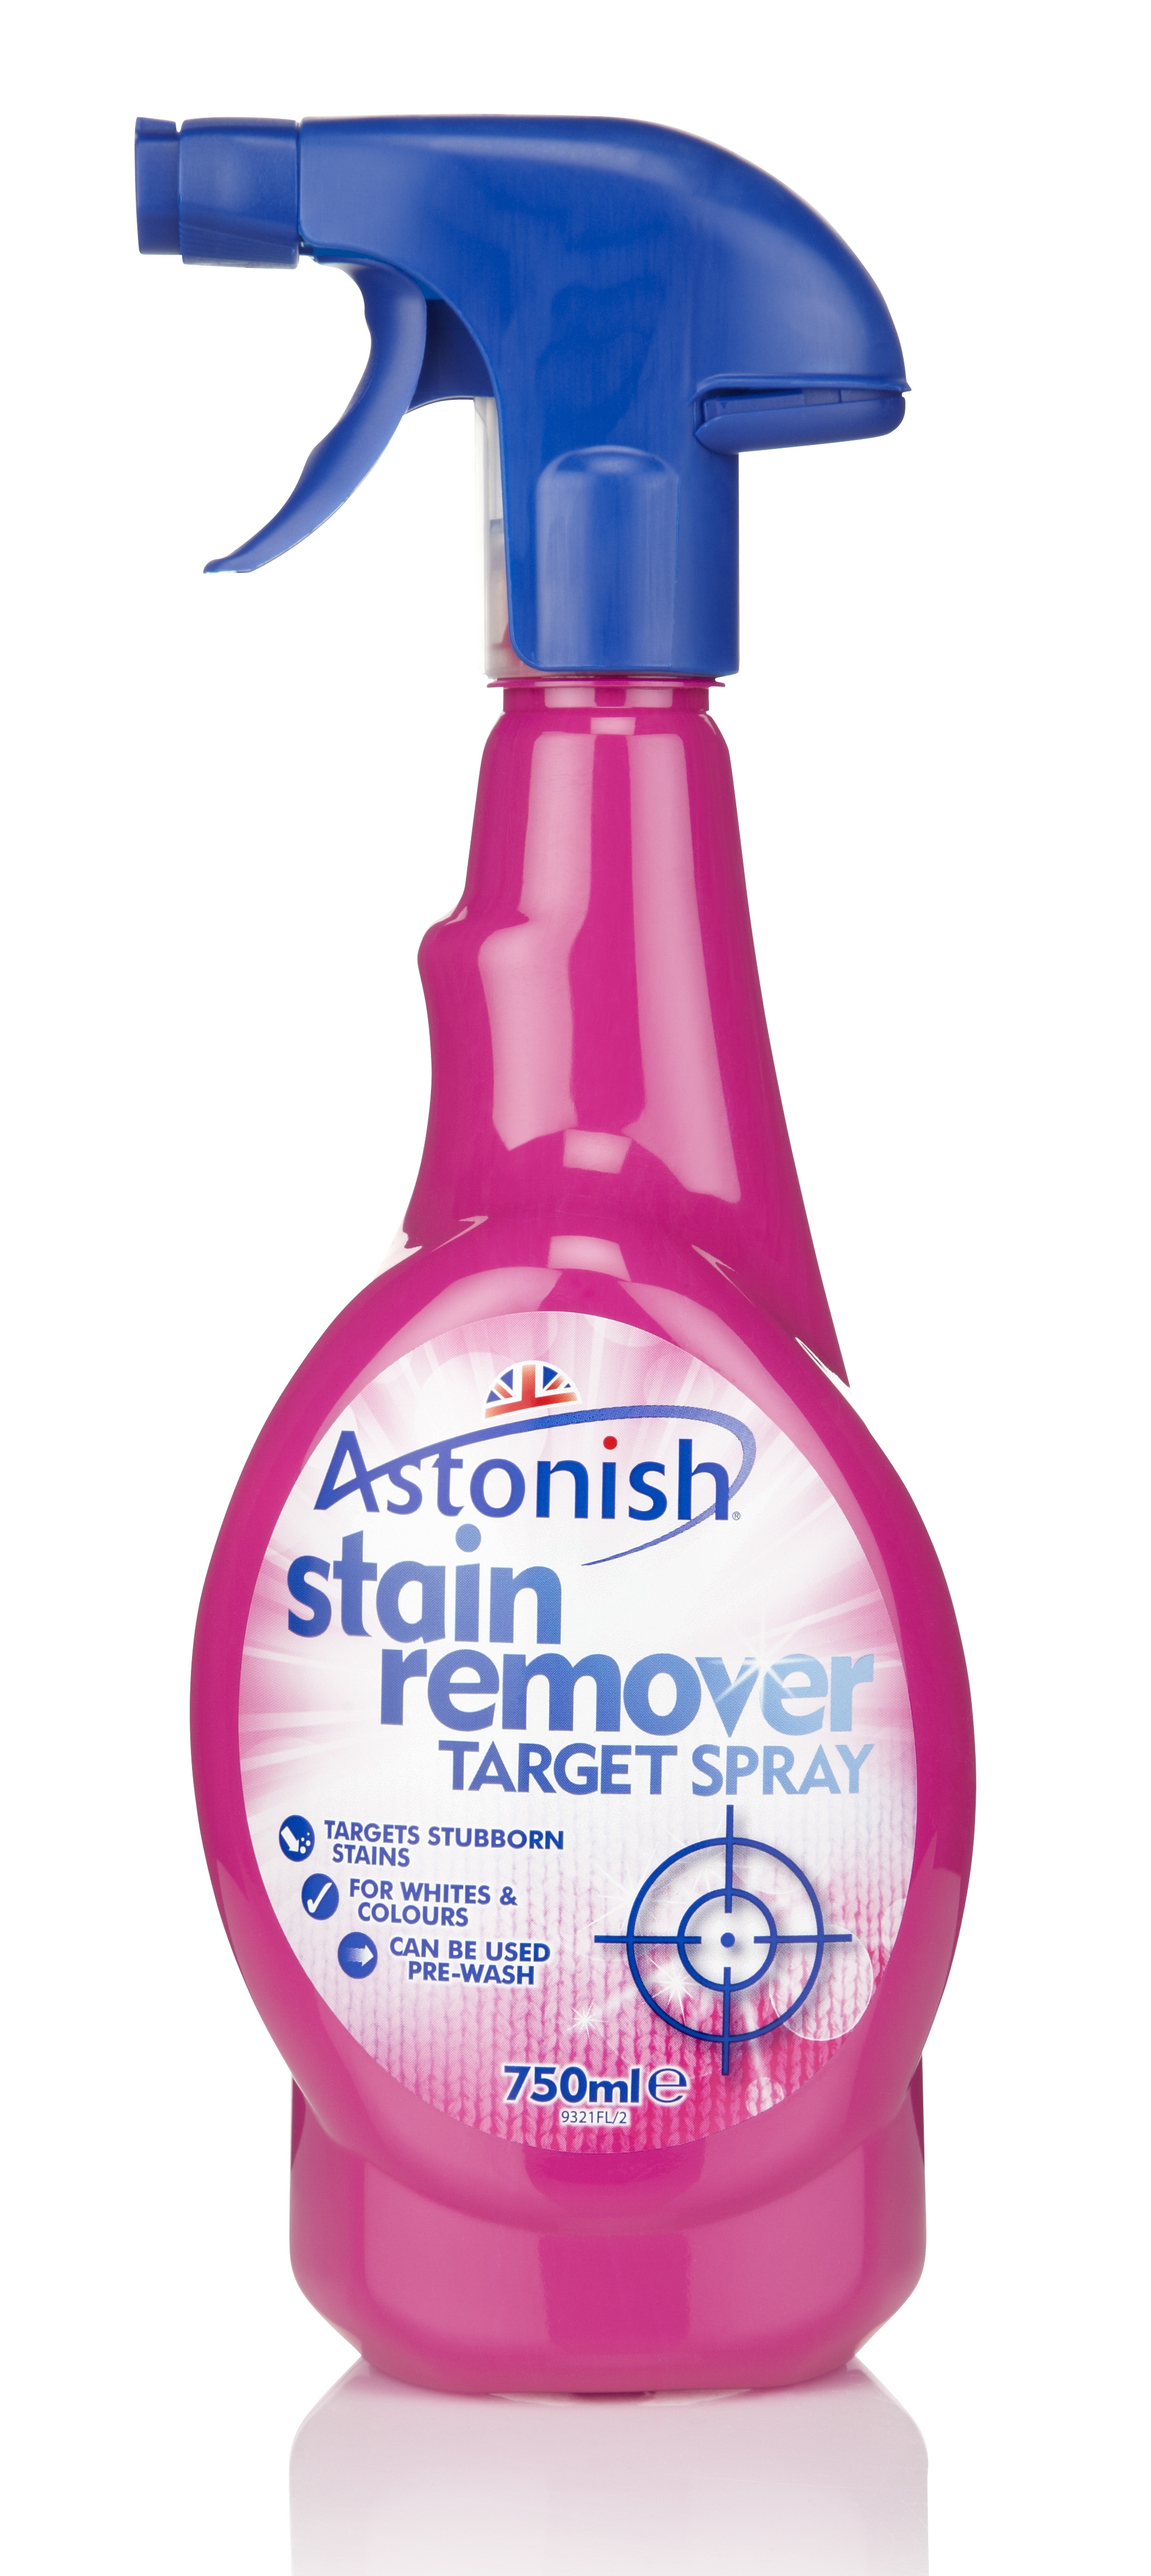 Astonish Stain Remover Target Spray 750ml.jpg